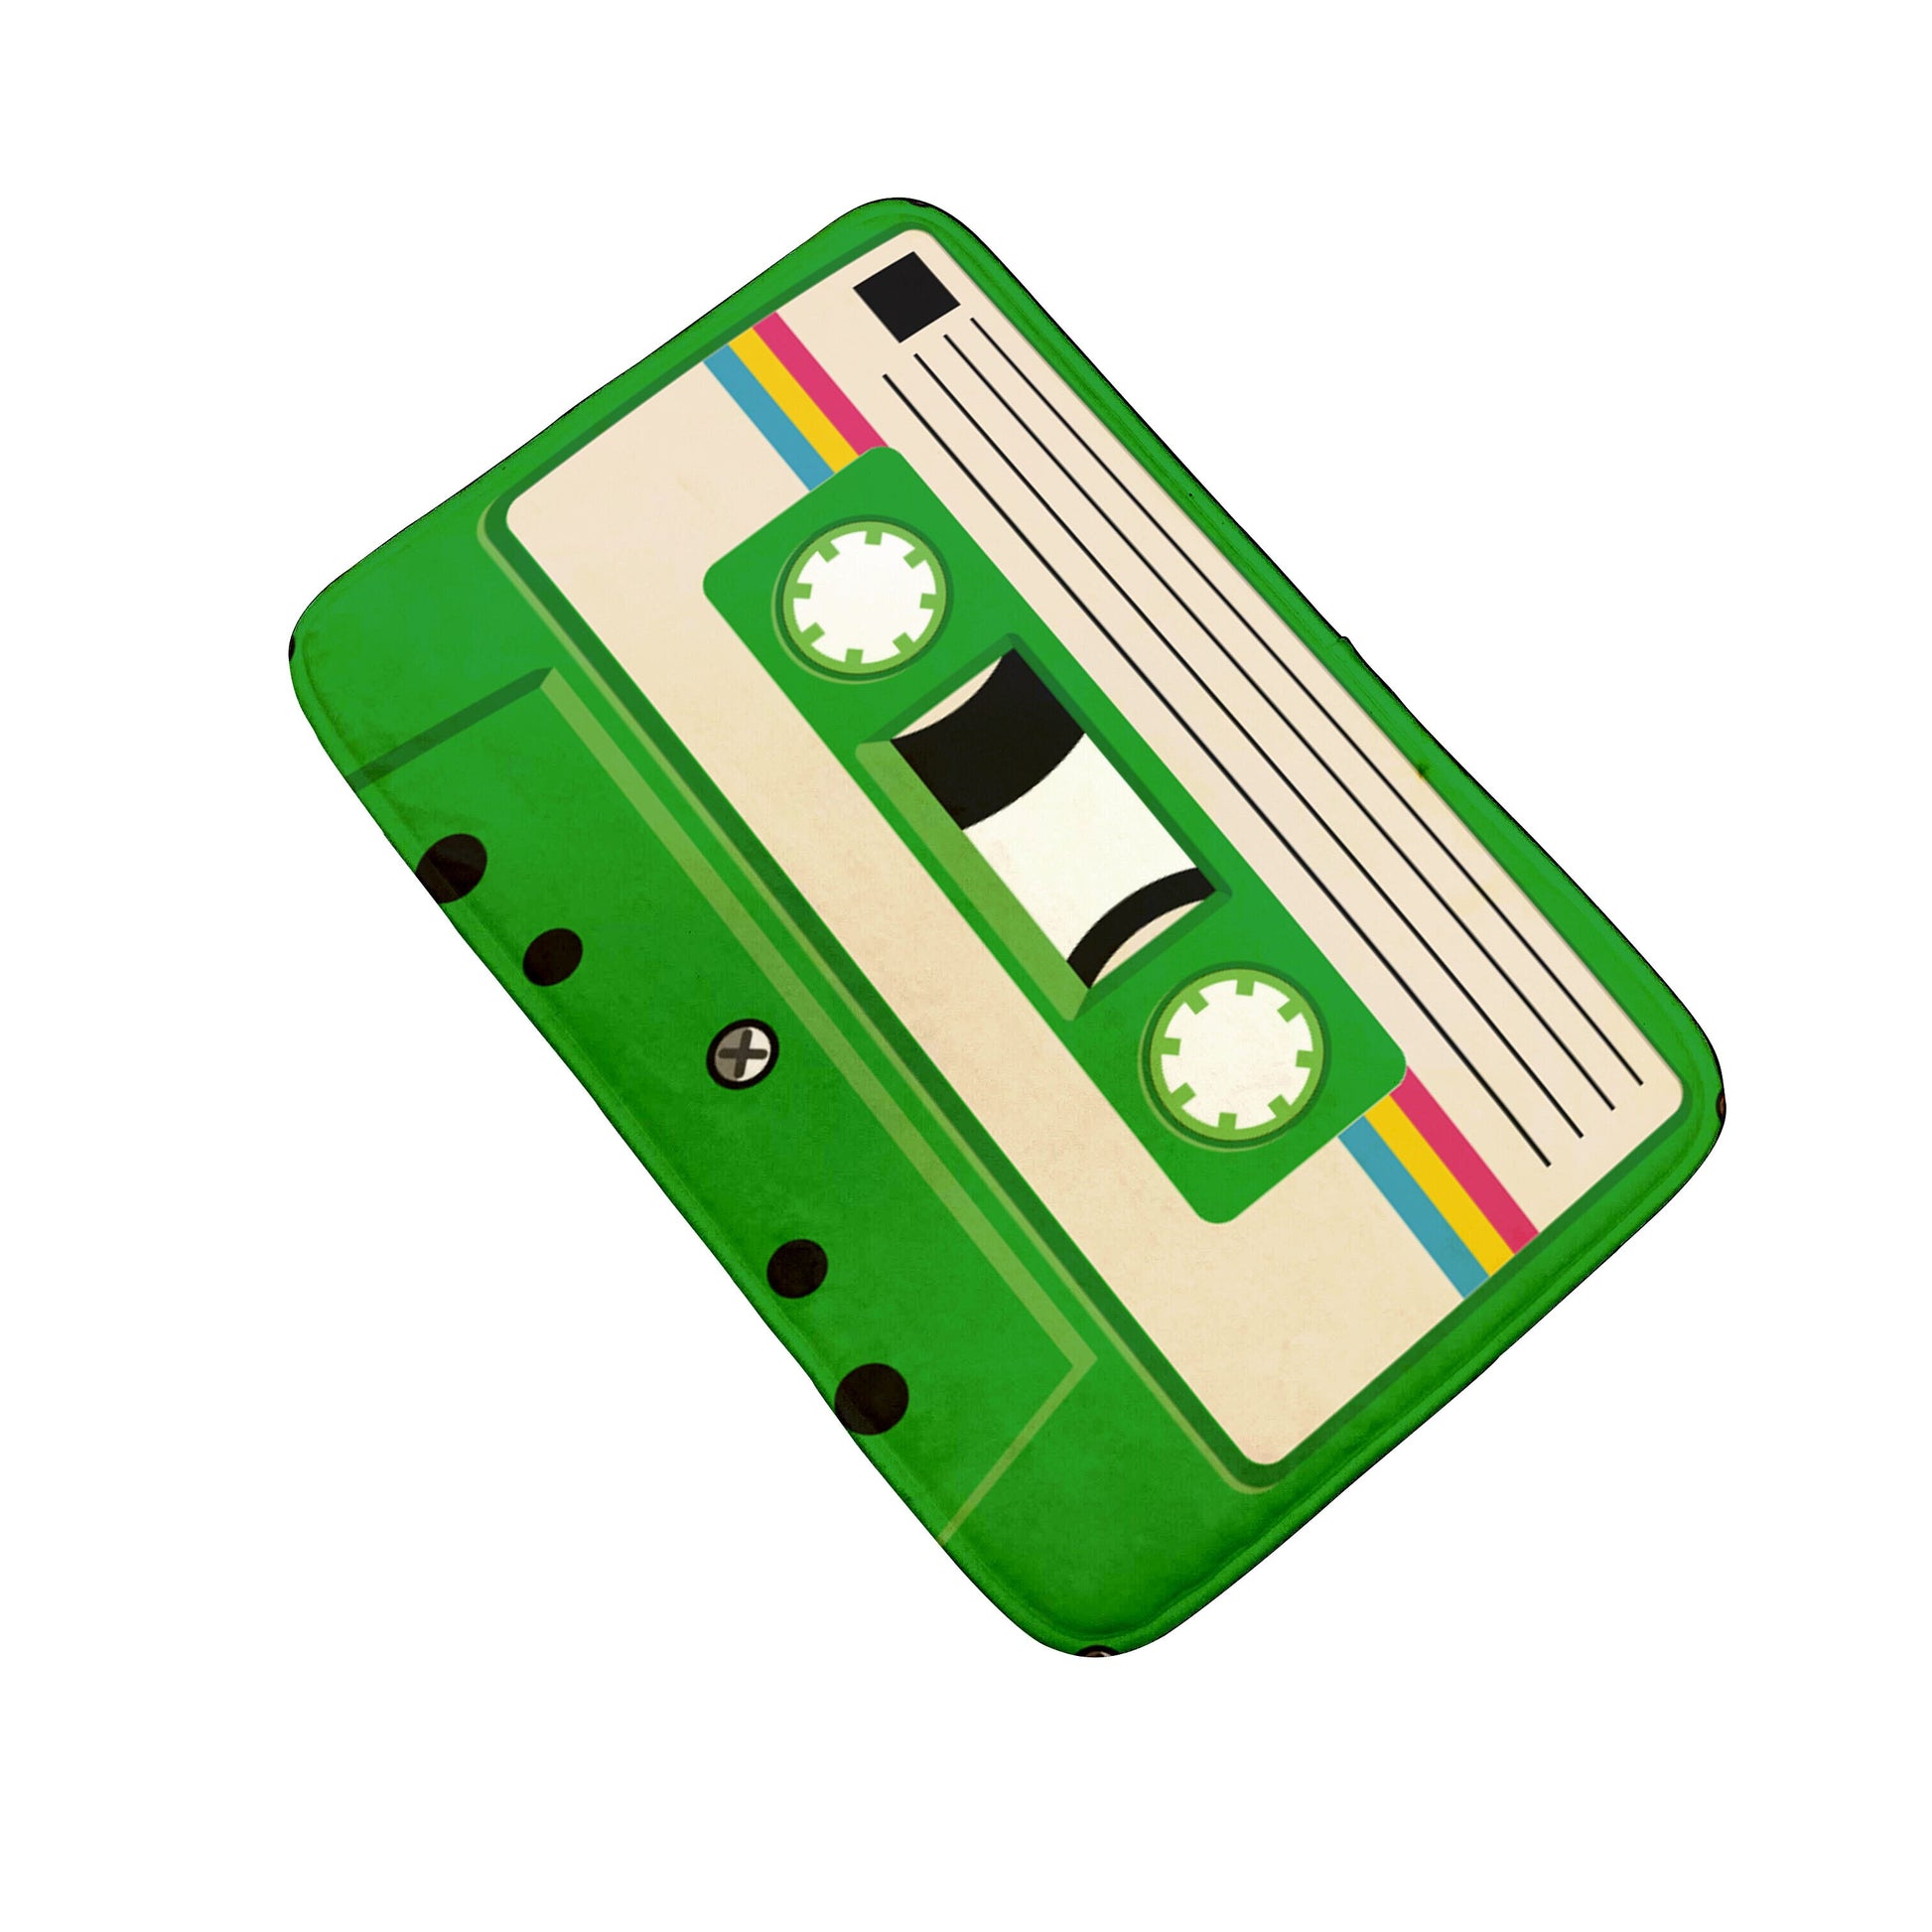 TEEK - A Bunch of Cassette Tape Rugs HOME DECOR theteekdotcom 12 15.75x23.62in 20-25 days